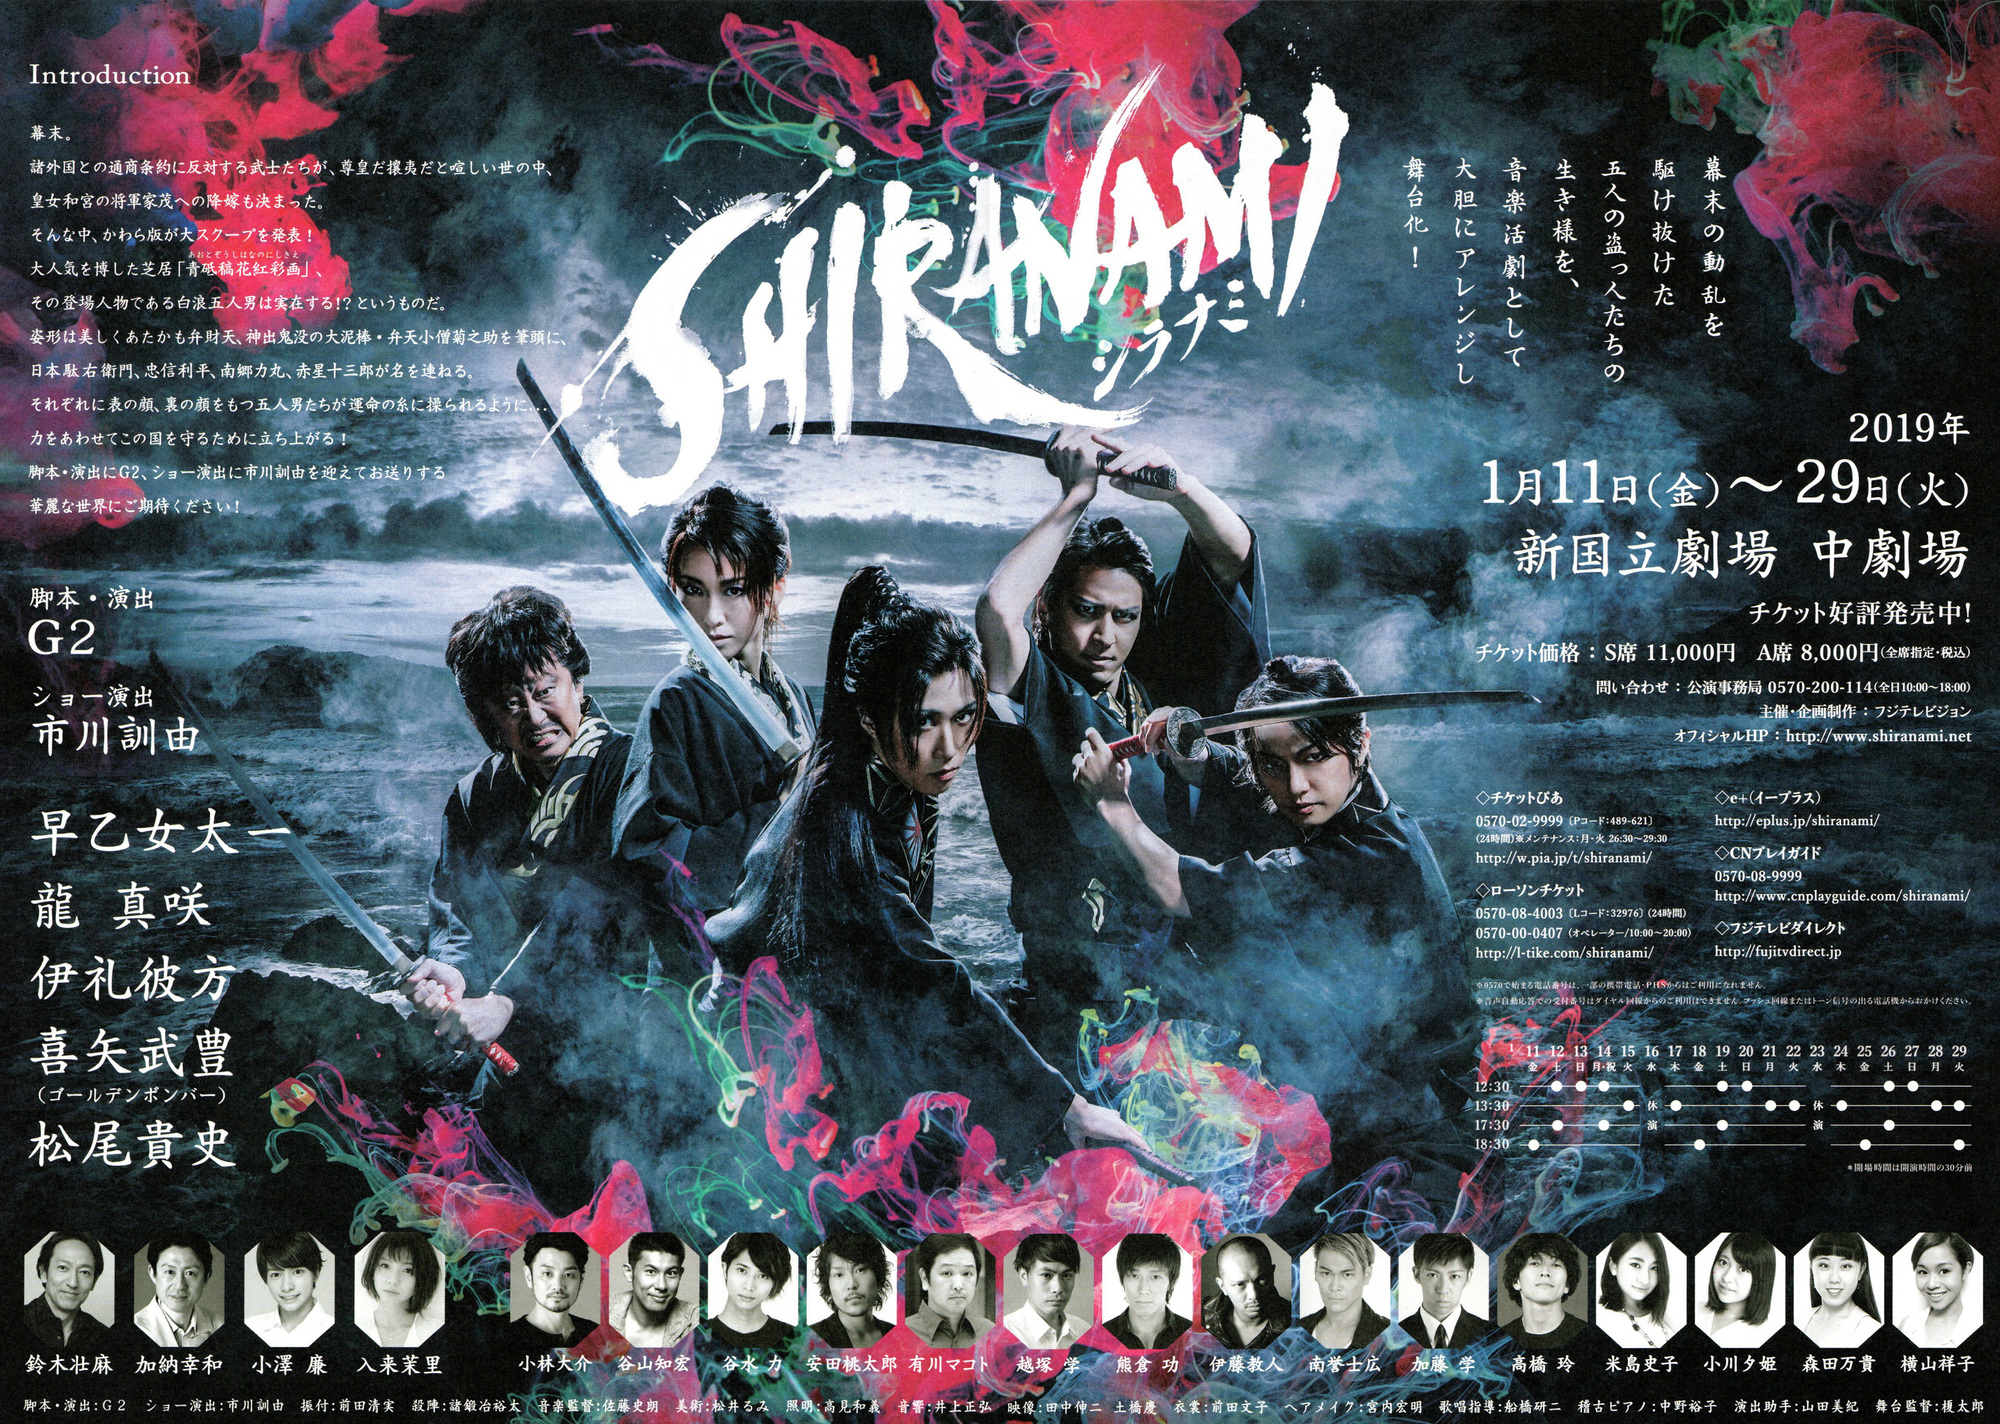 Shop】音楽活劇『SHIRANAMI』DVD予約販売 | 伊礼彼方 Official Site